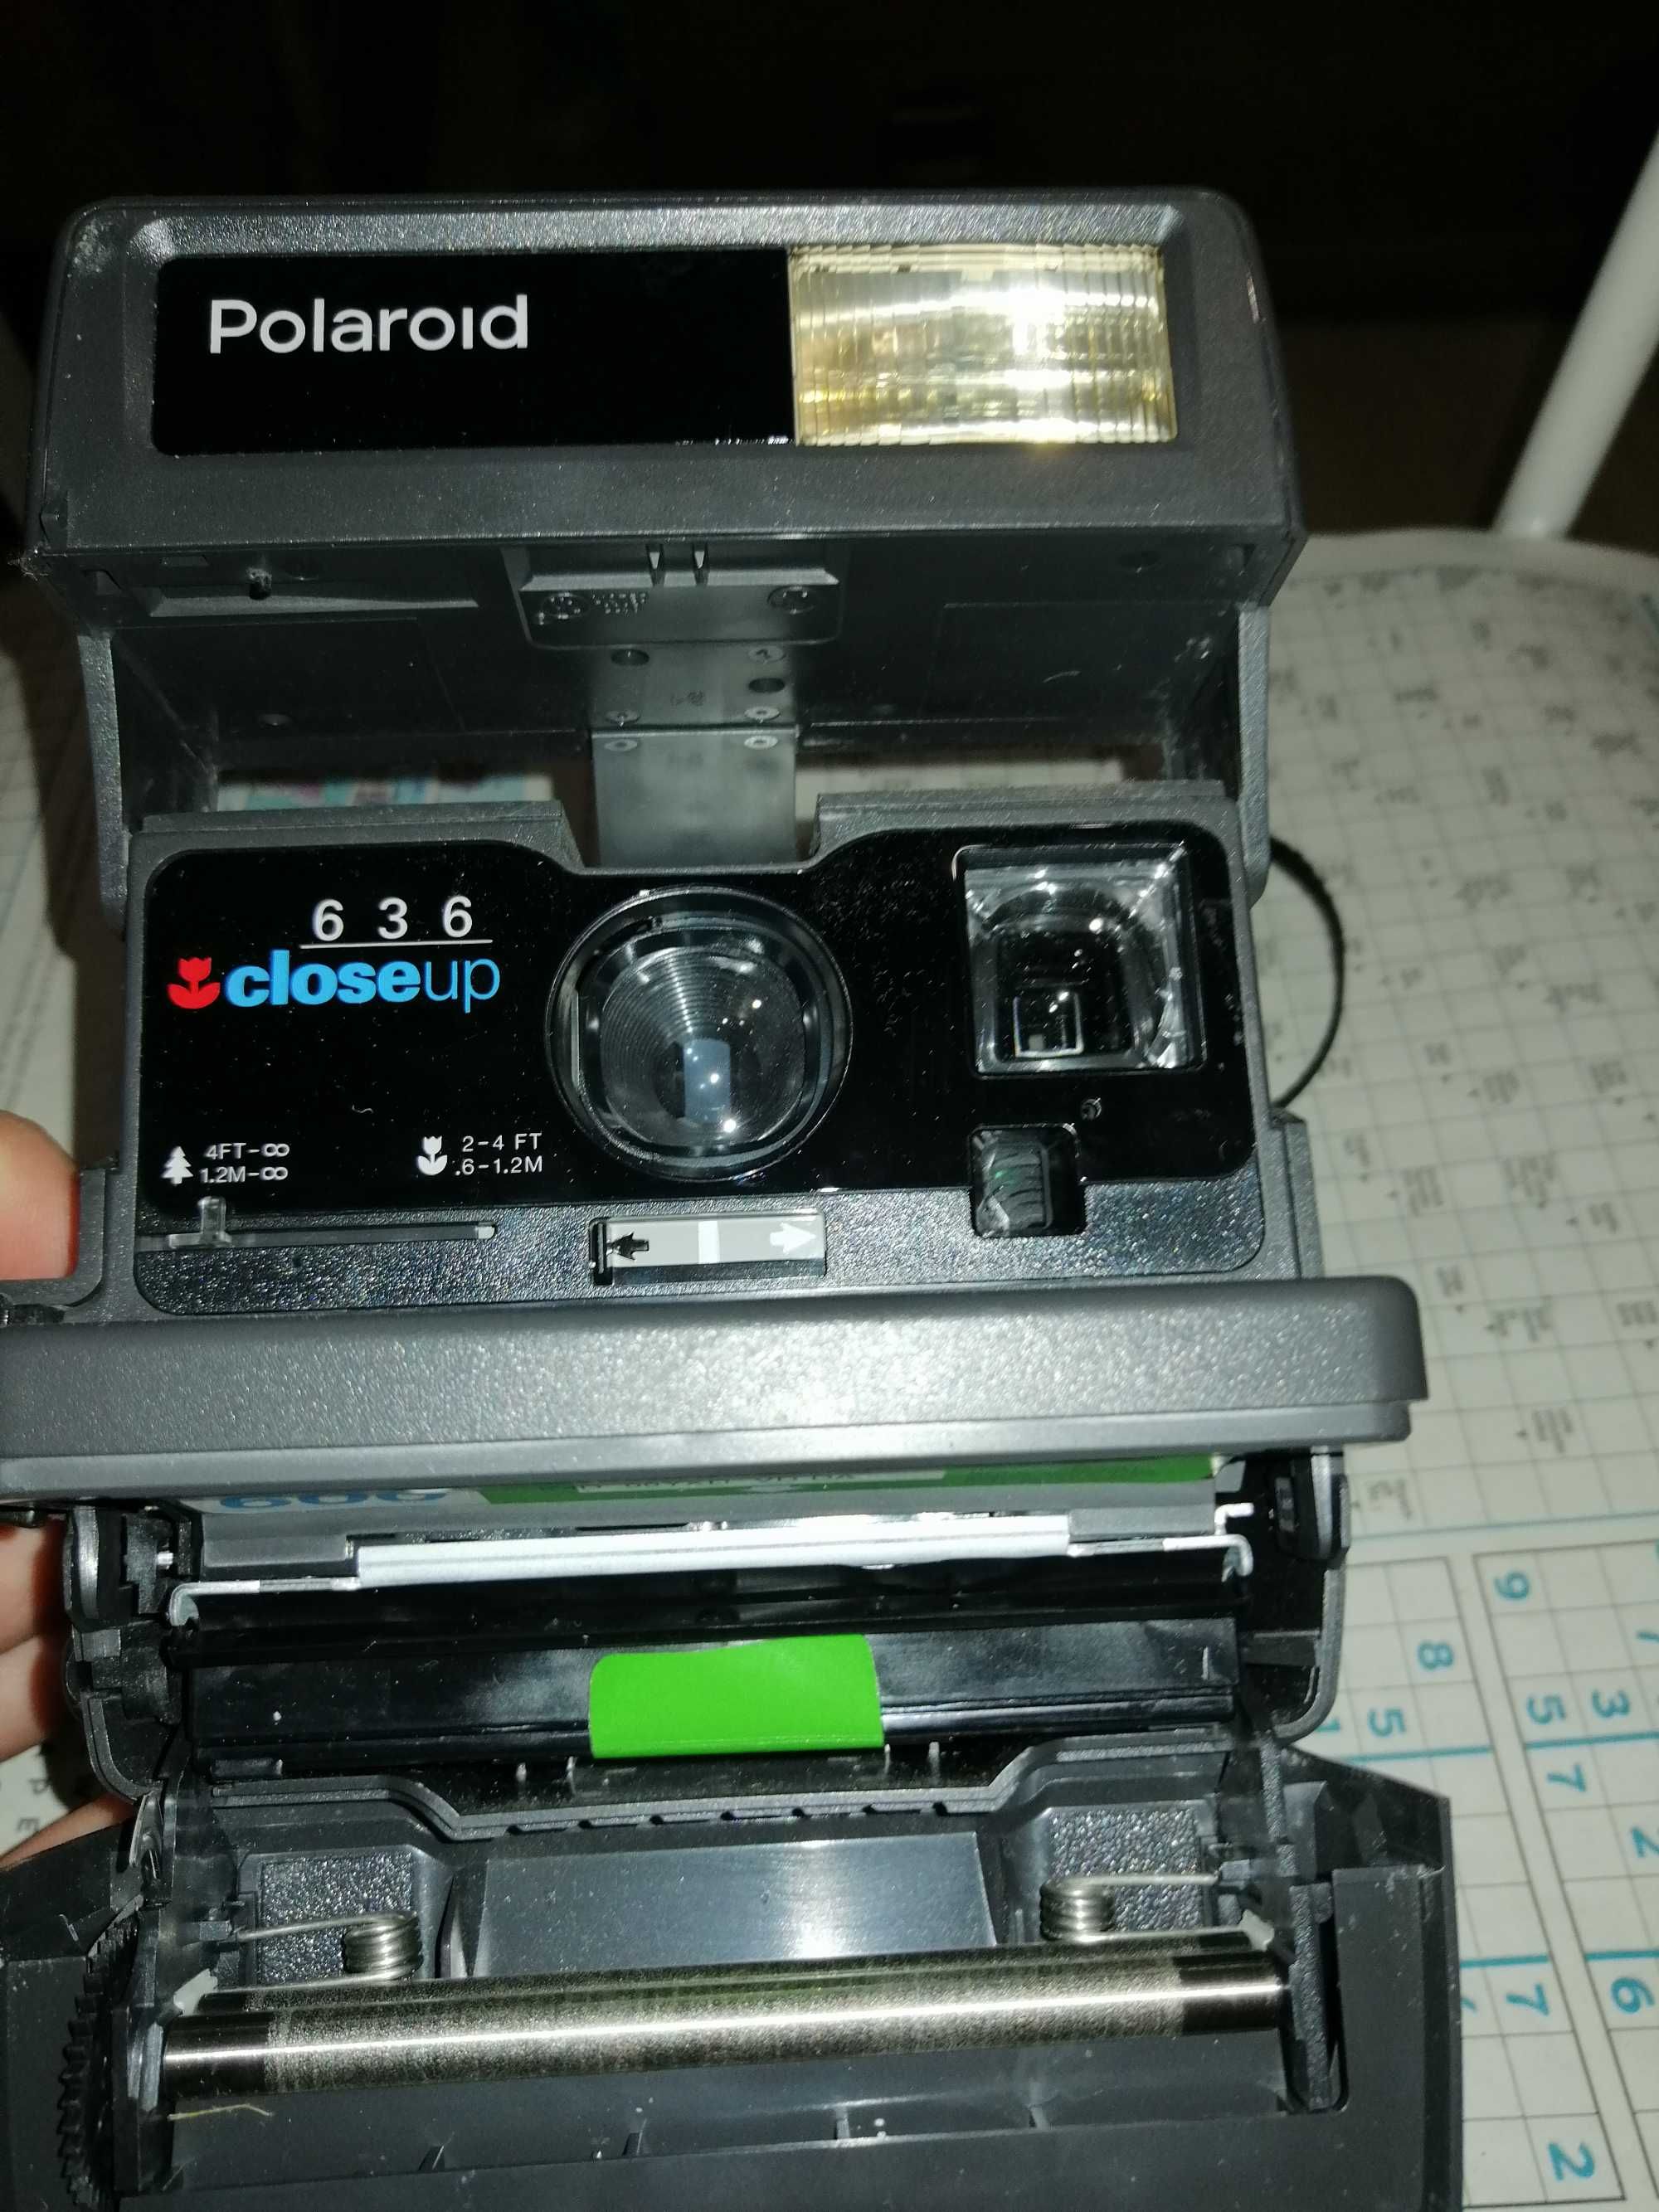 Aparat Polaroid 636 Closeup